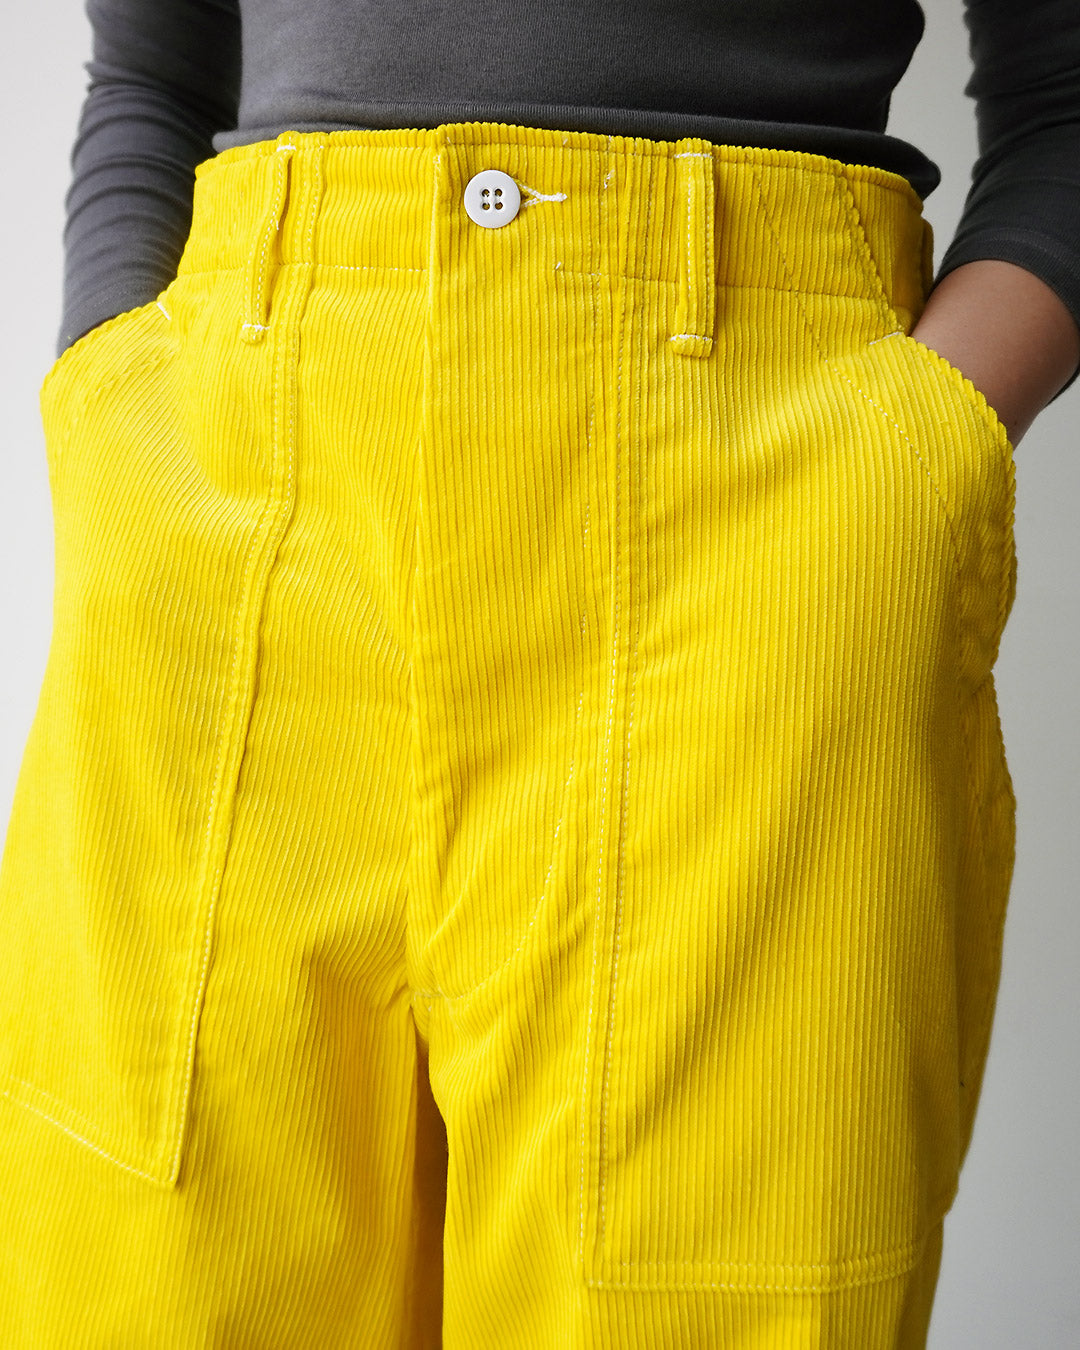 TUKI baker pants / yellow / 9 wale corduroy / size0